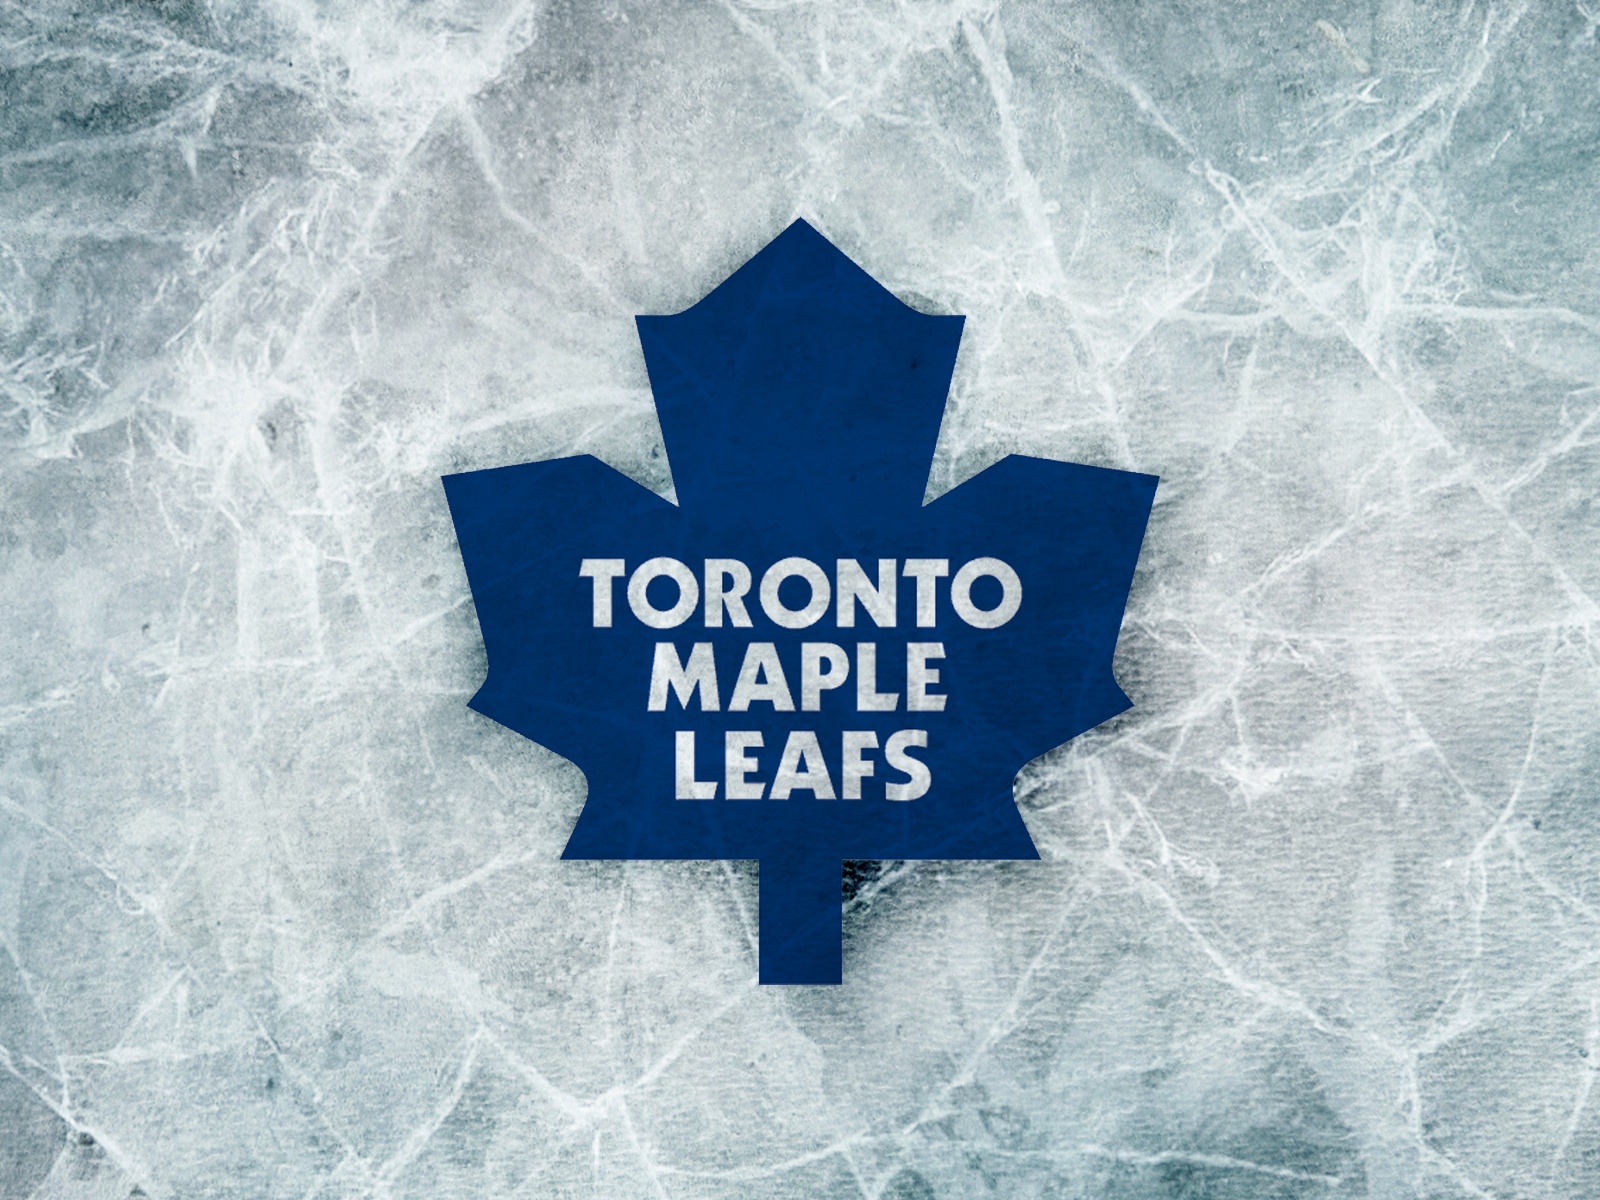 Toronto Maple Leafs Wallpaper | 1600x1200 | ID:25616